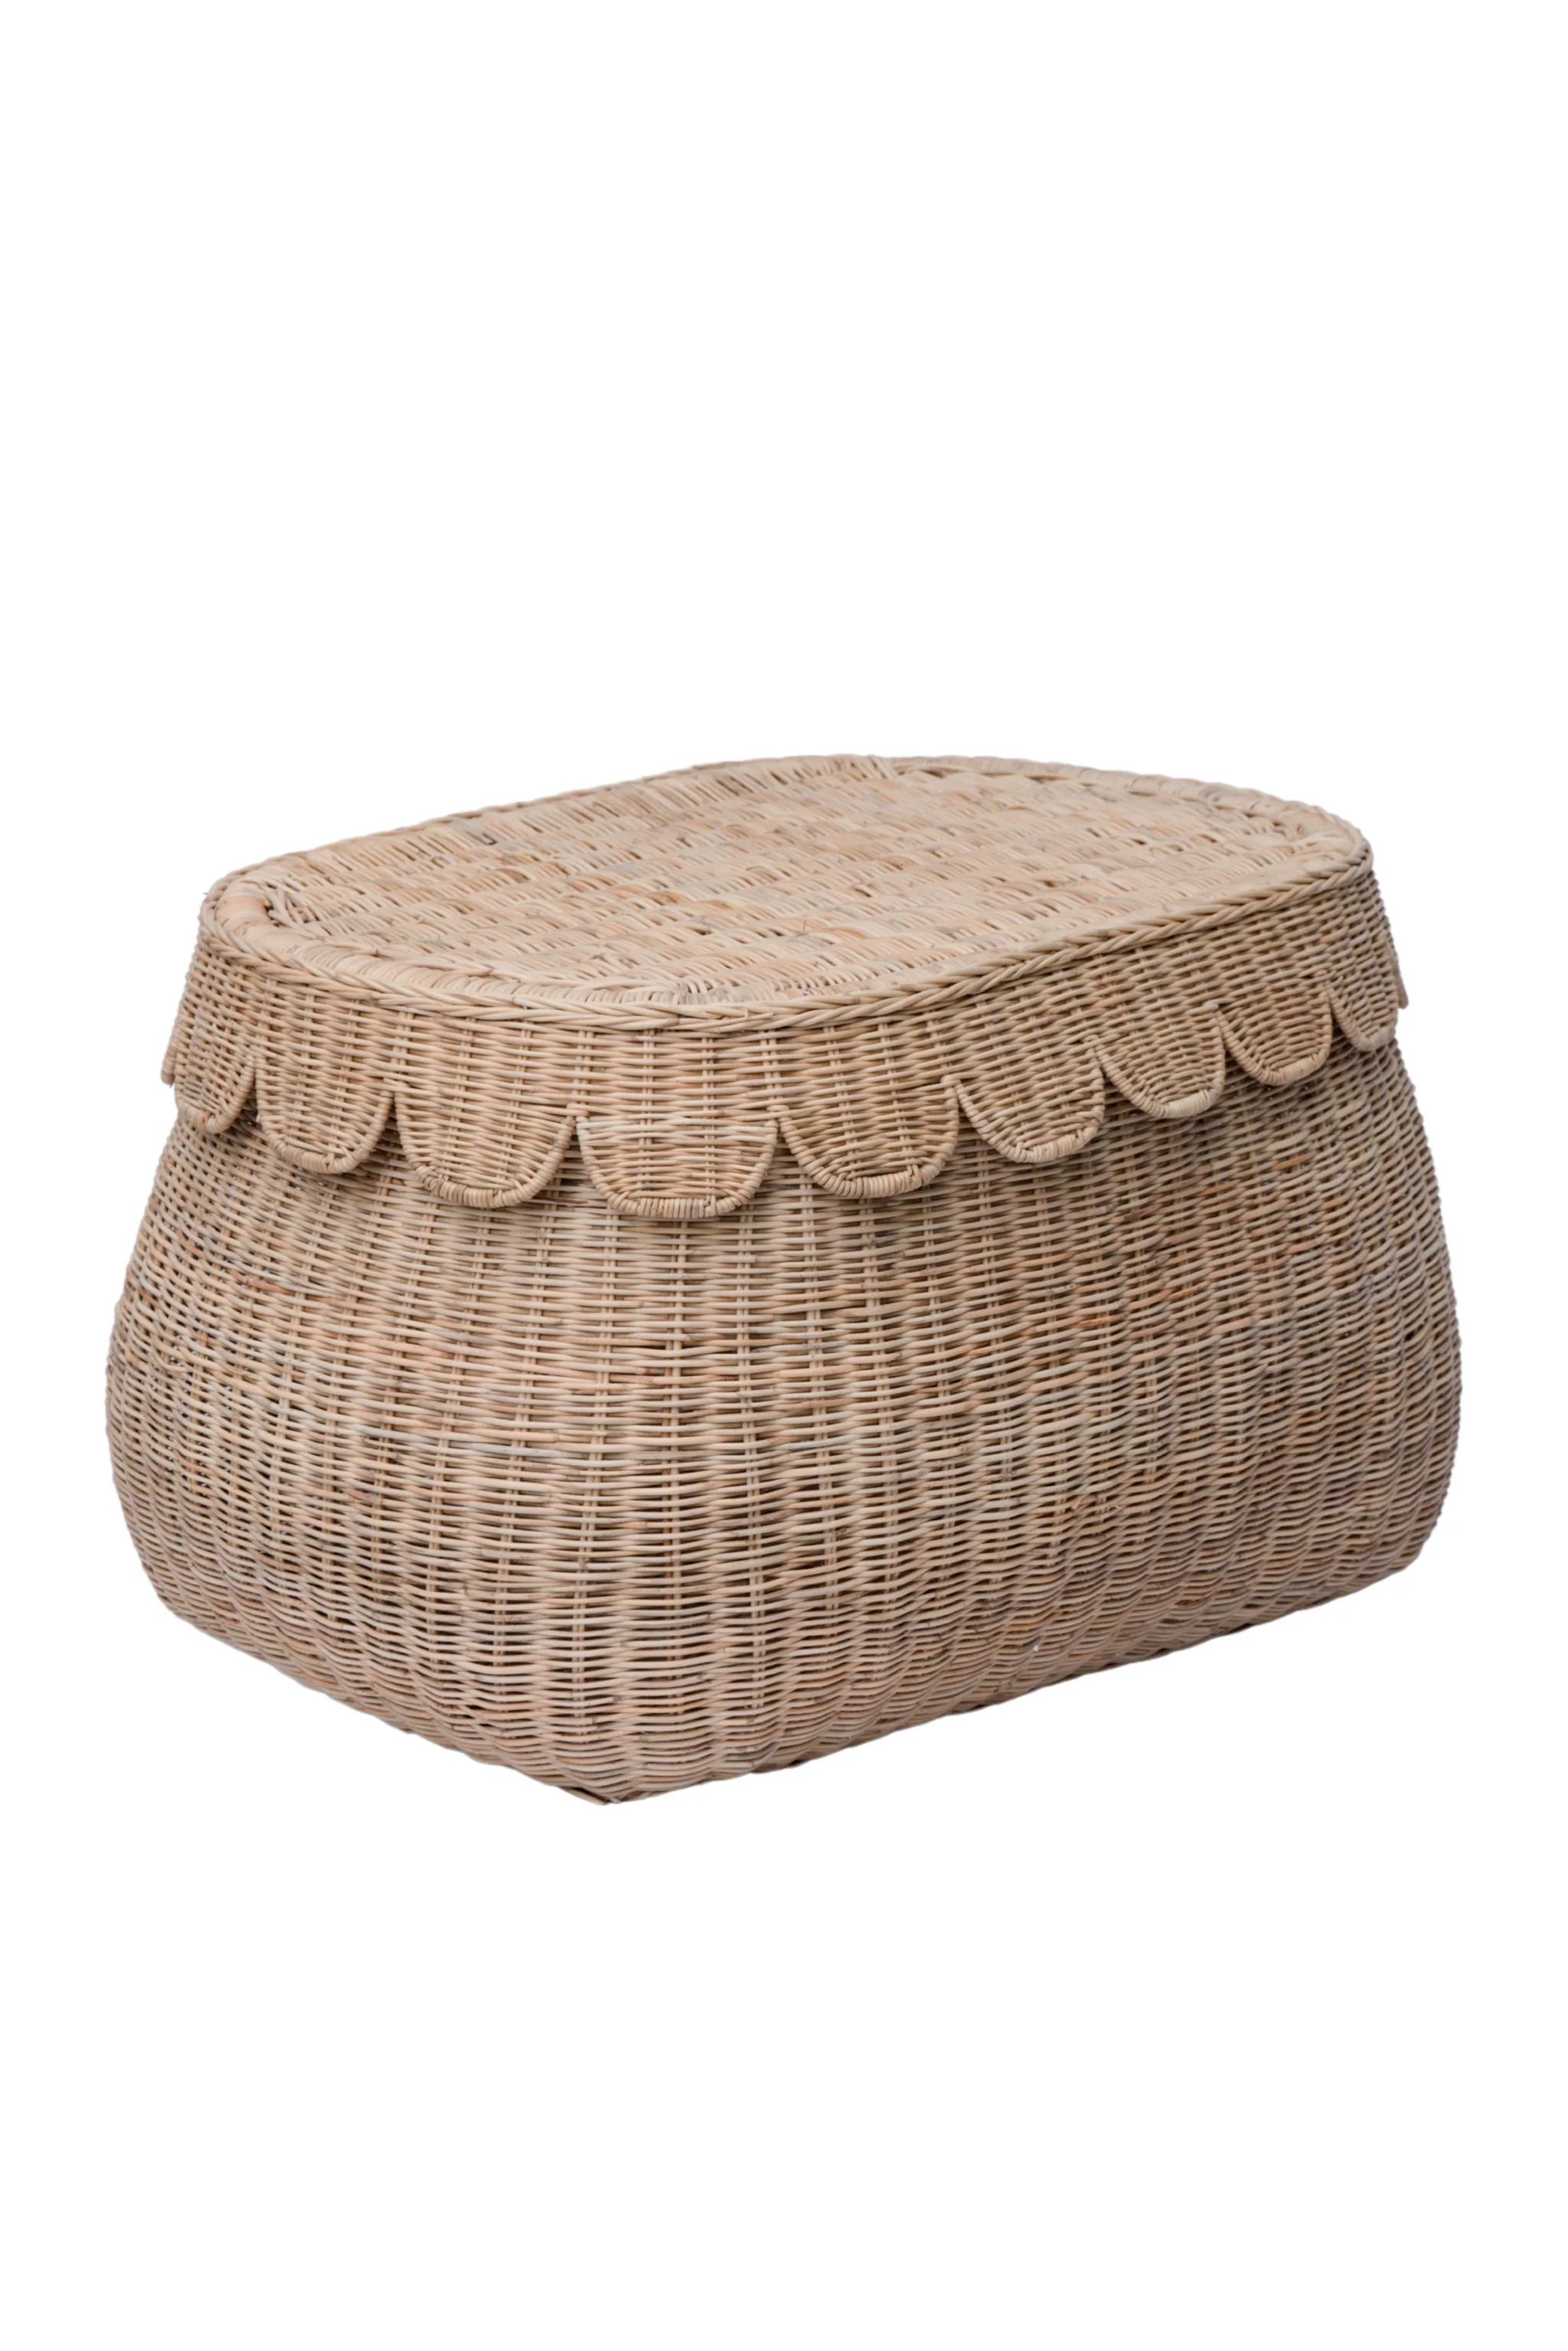 Scalloped Rattan Basket - Small - Pre-Sale | Auden & Avery